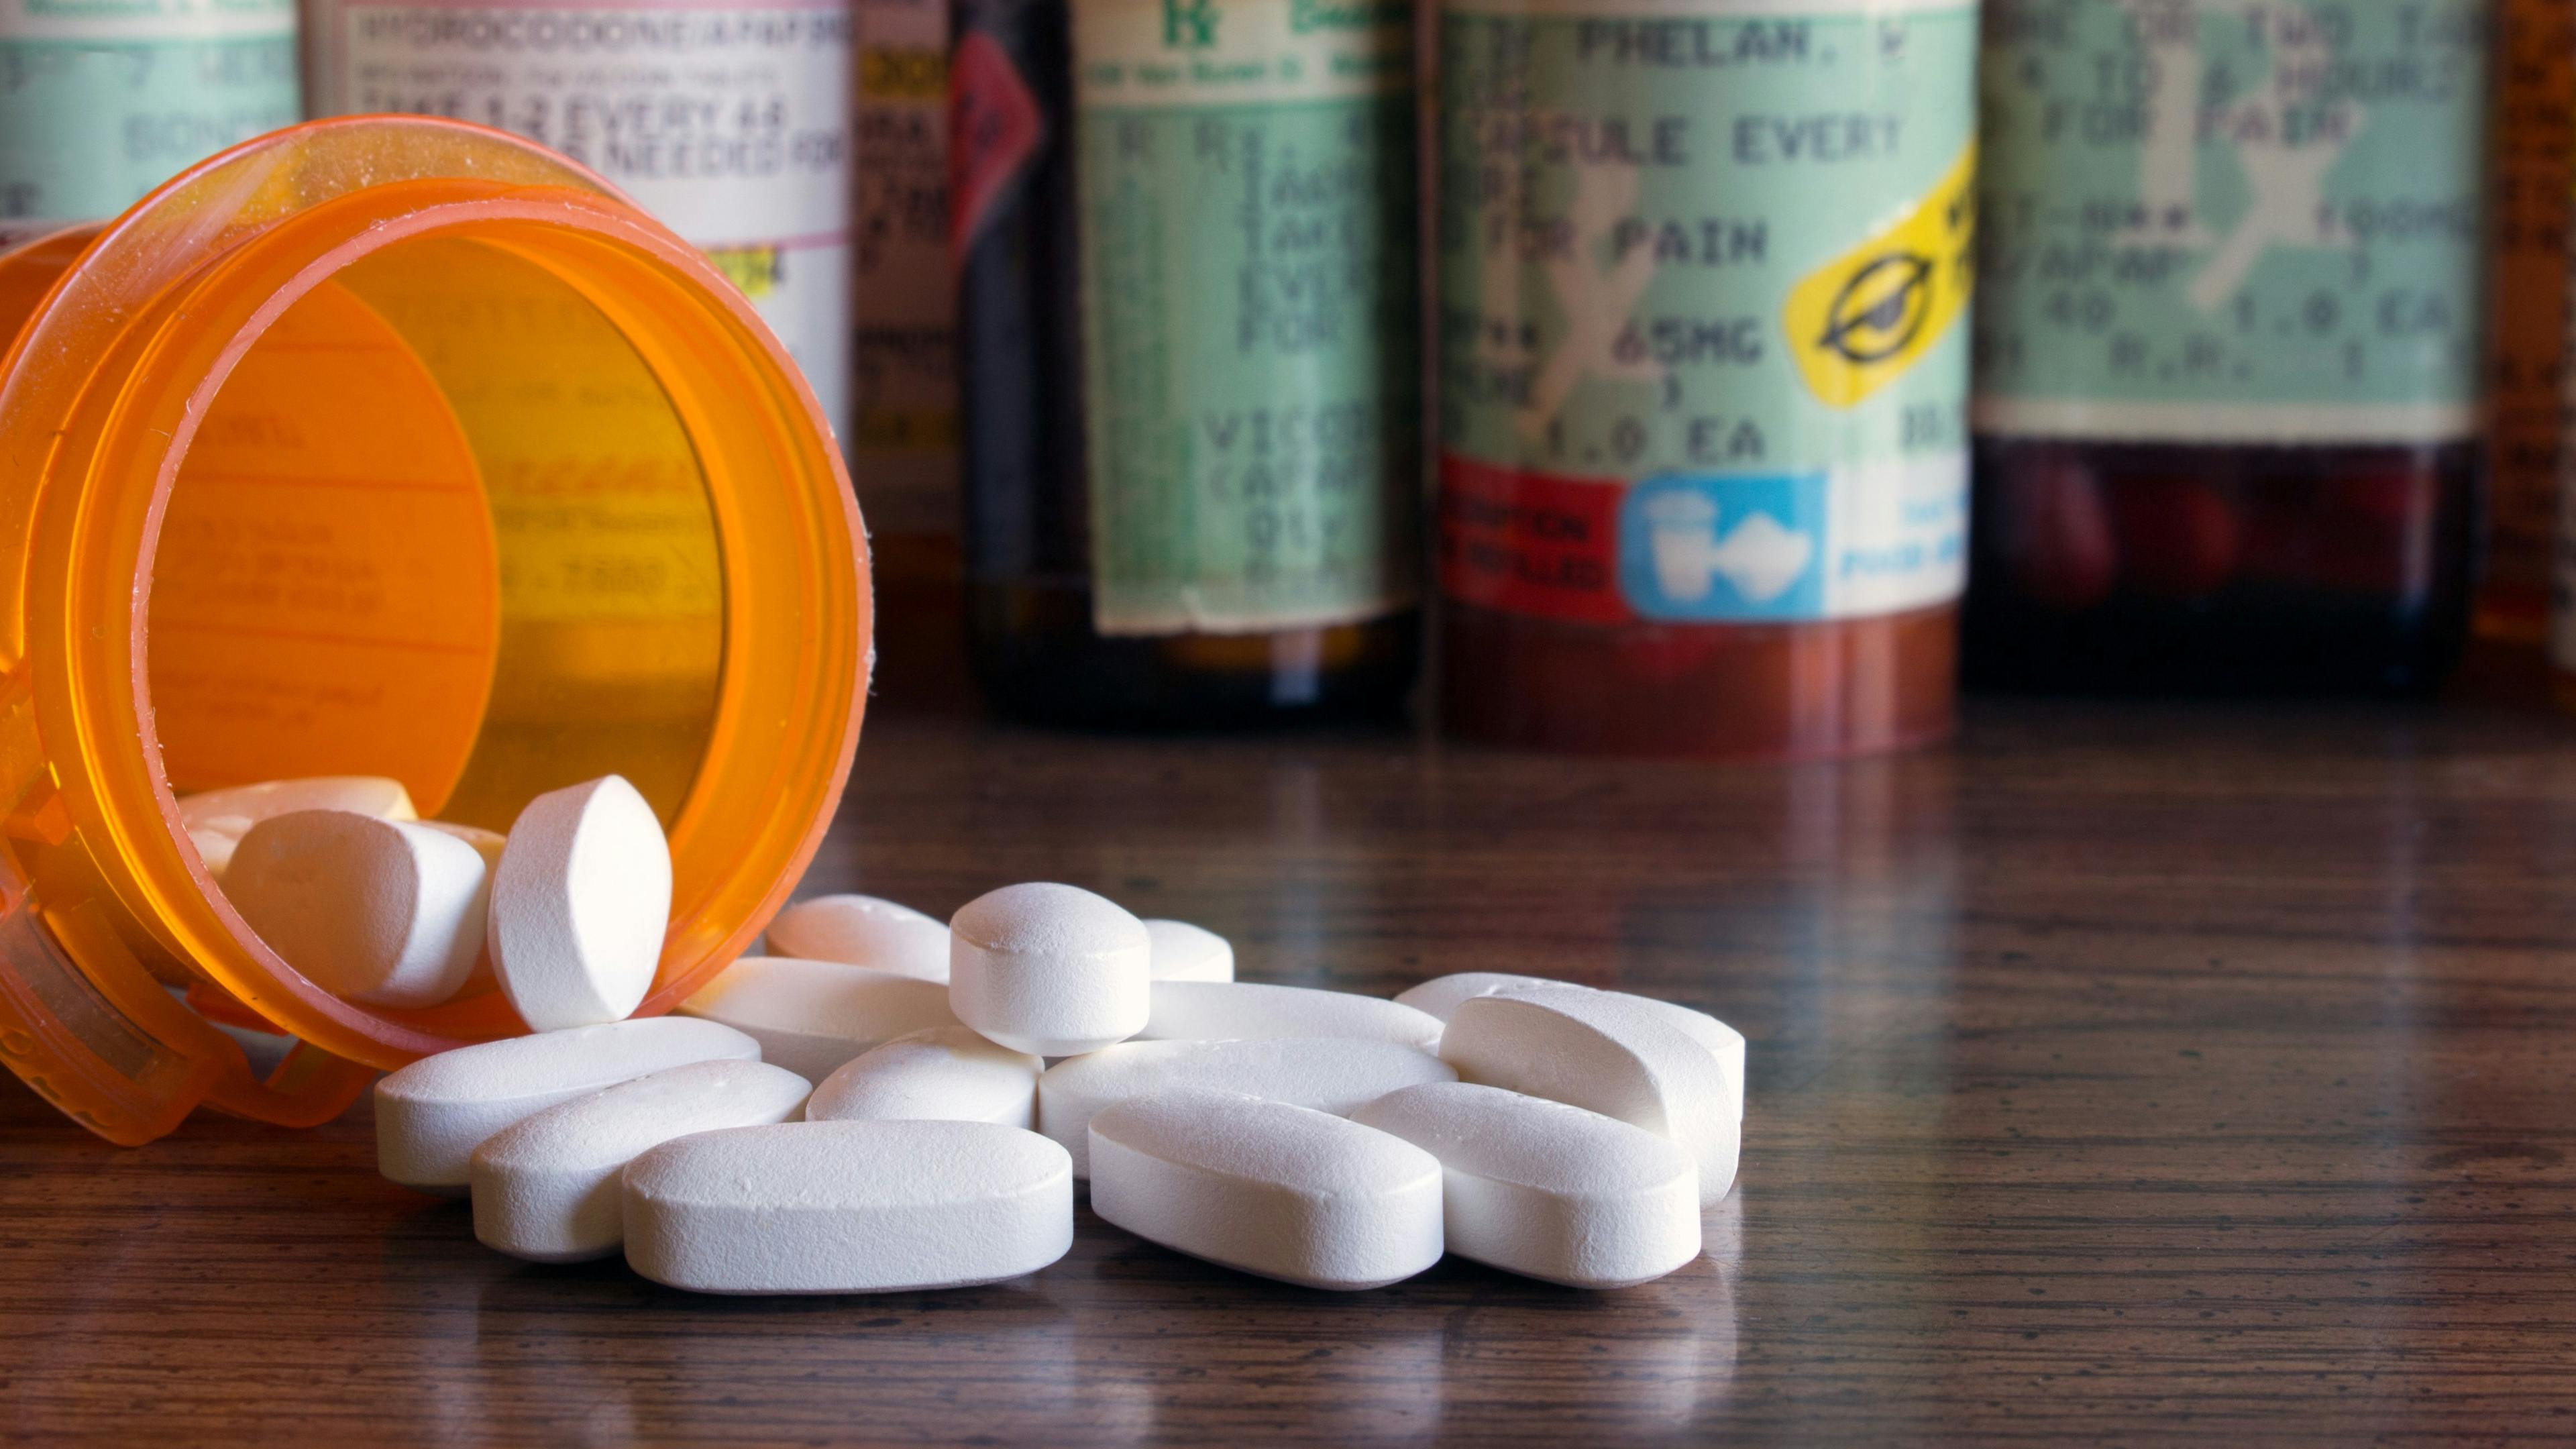 Increase in adolescent drug overdose deaths